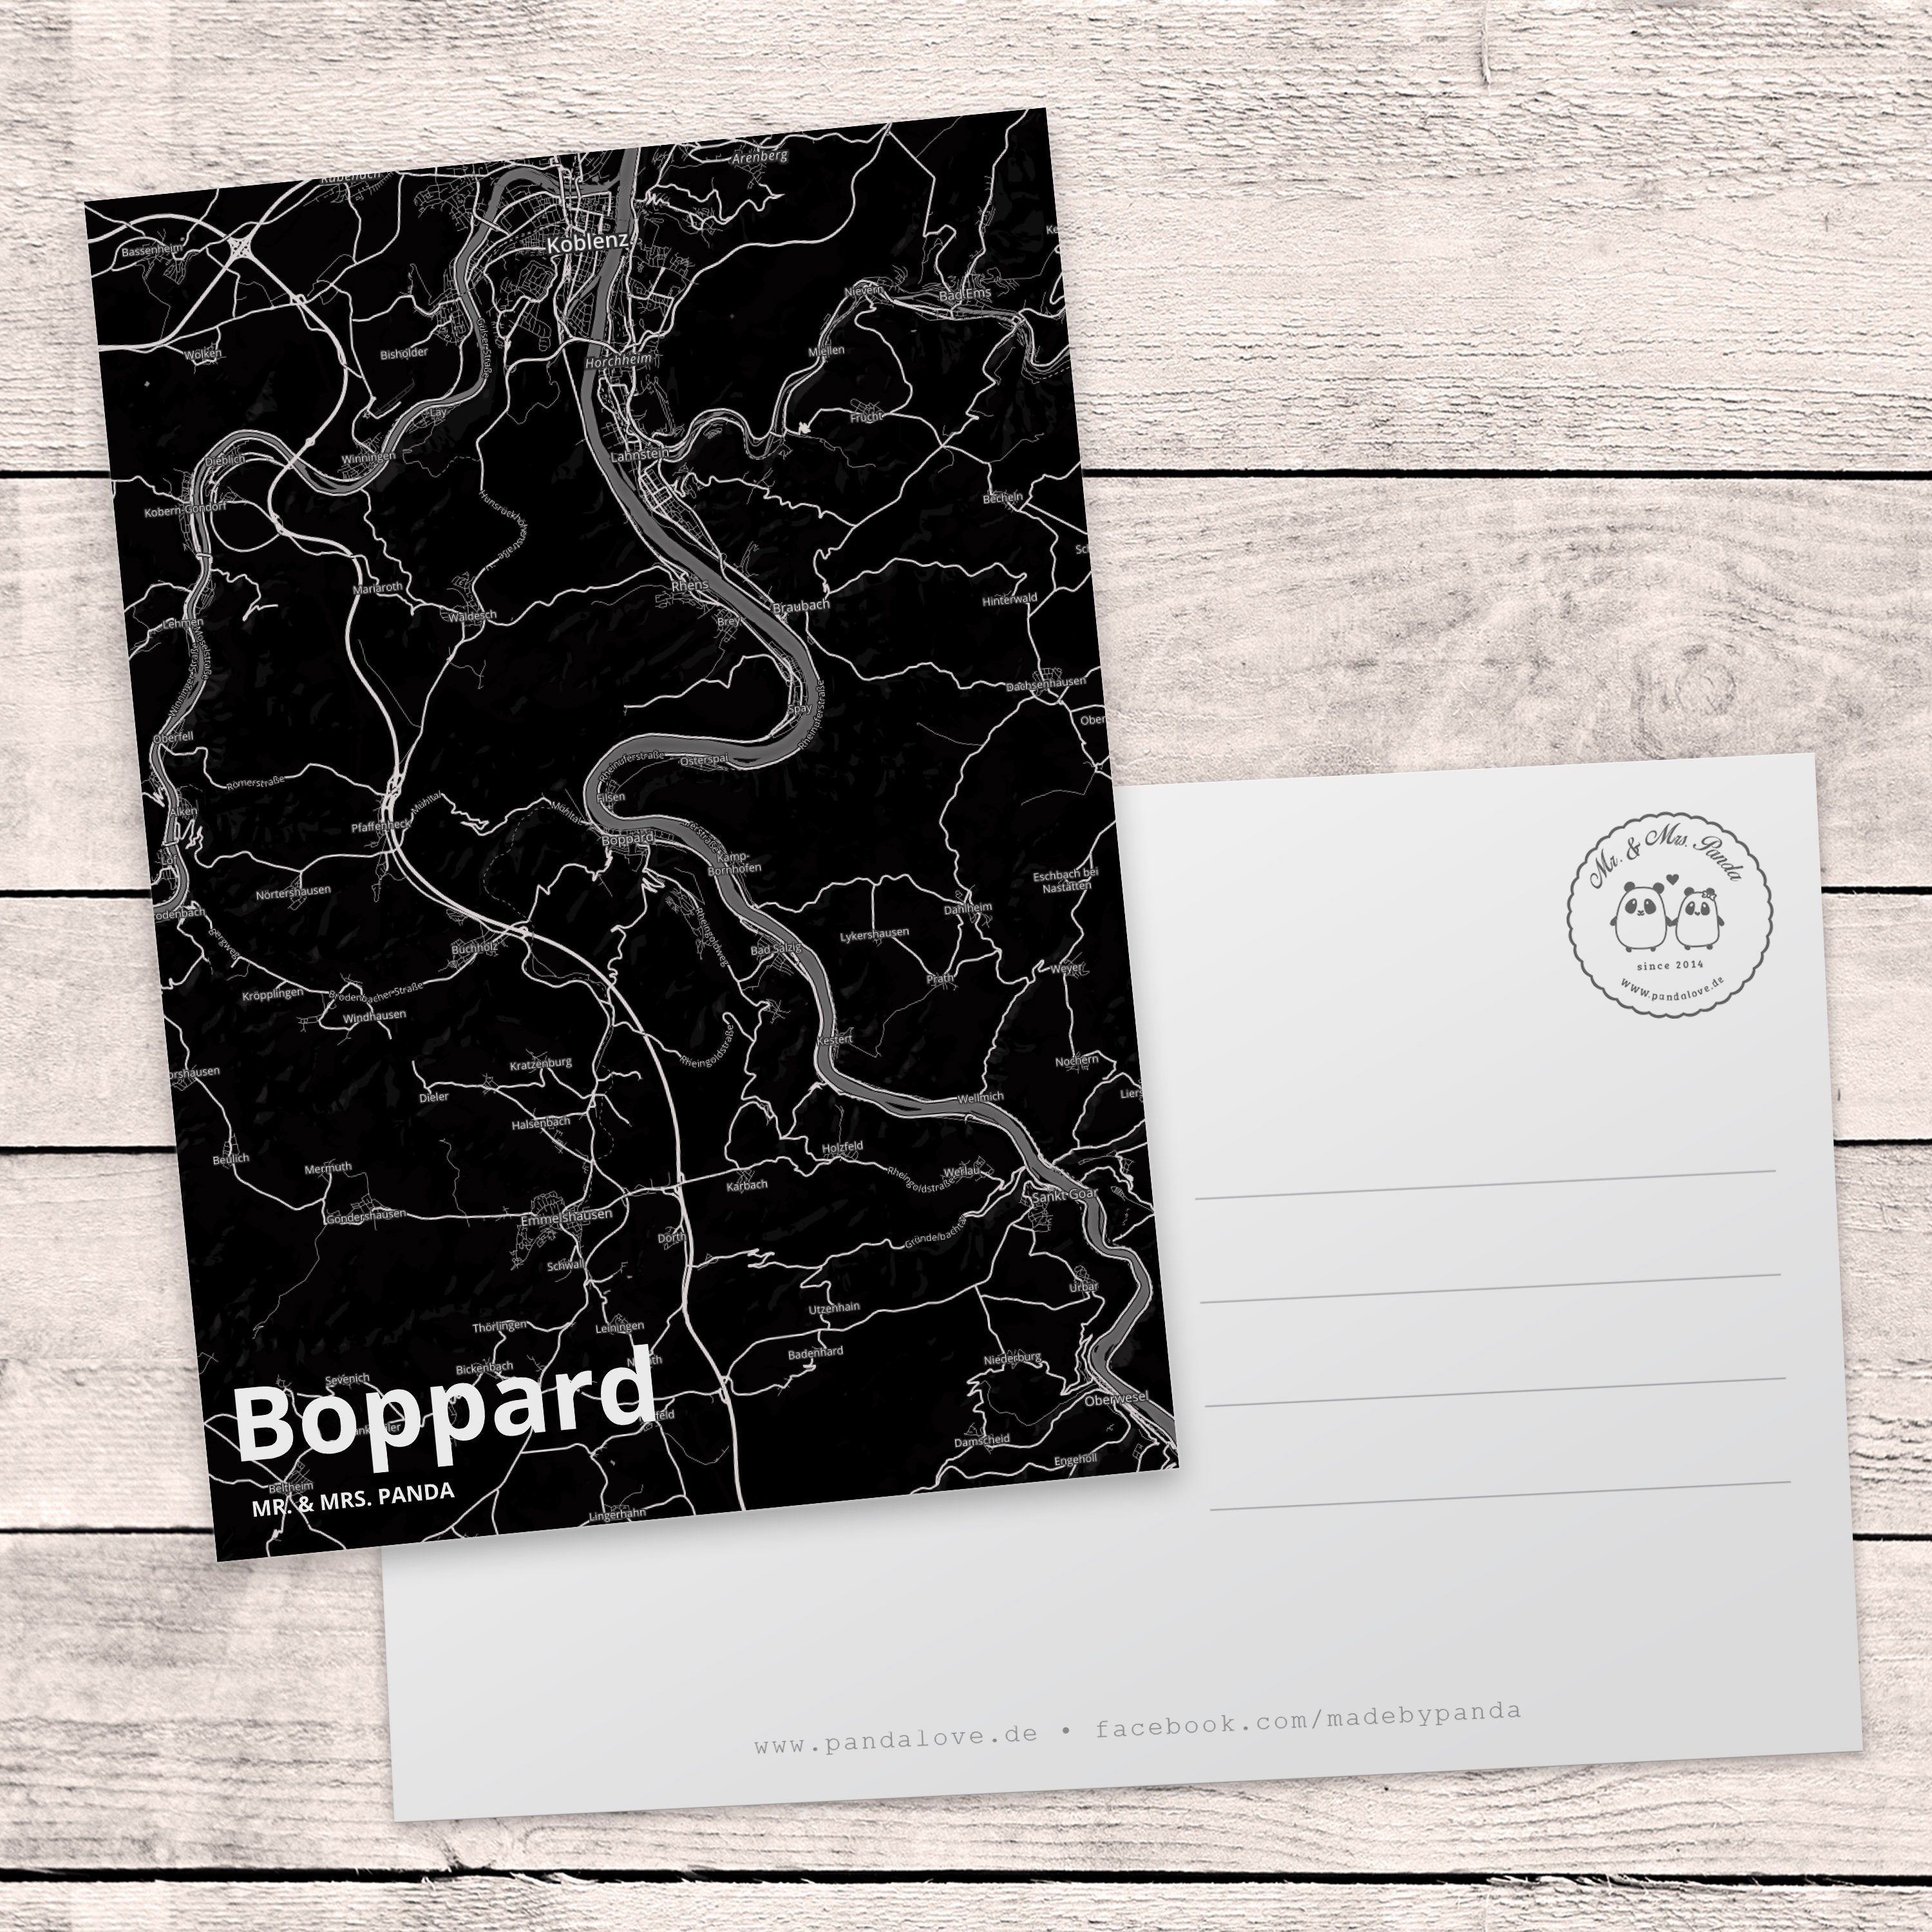 Mr. & Mrs. Ansicht Stadt Postkarte Karte Boppard - Map Dorf Stadtplan, Geschenk, Panda Landkarte